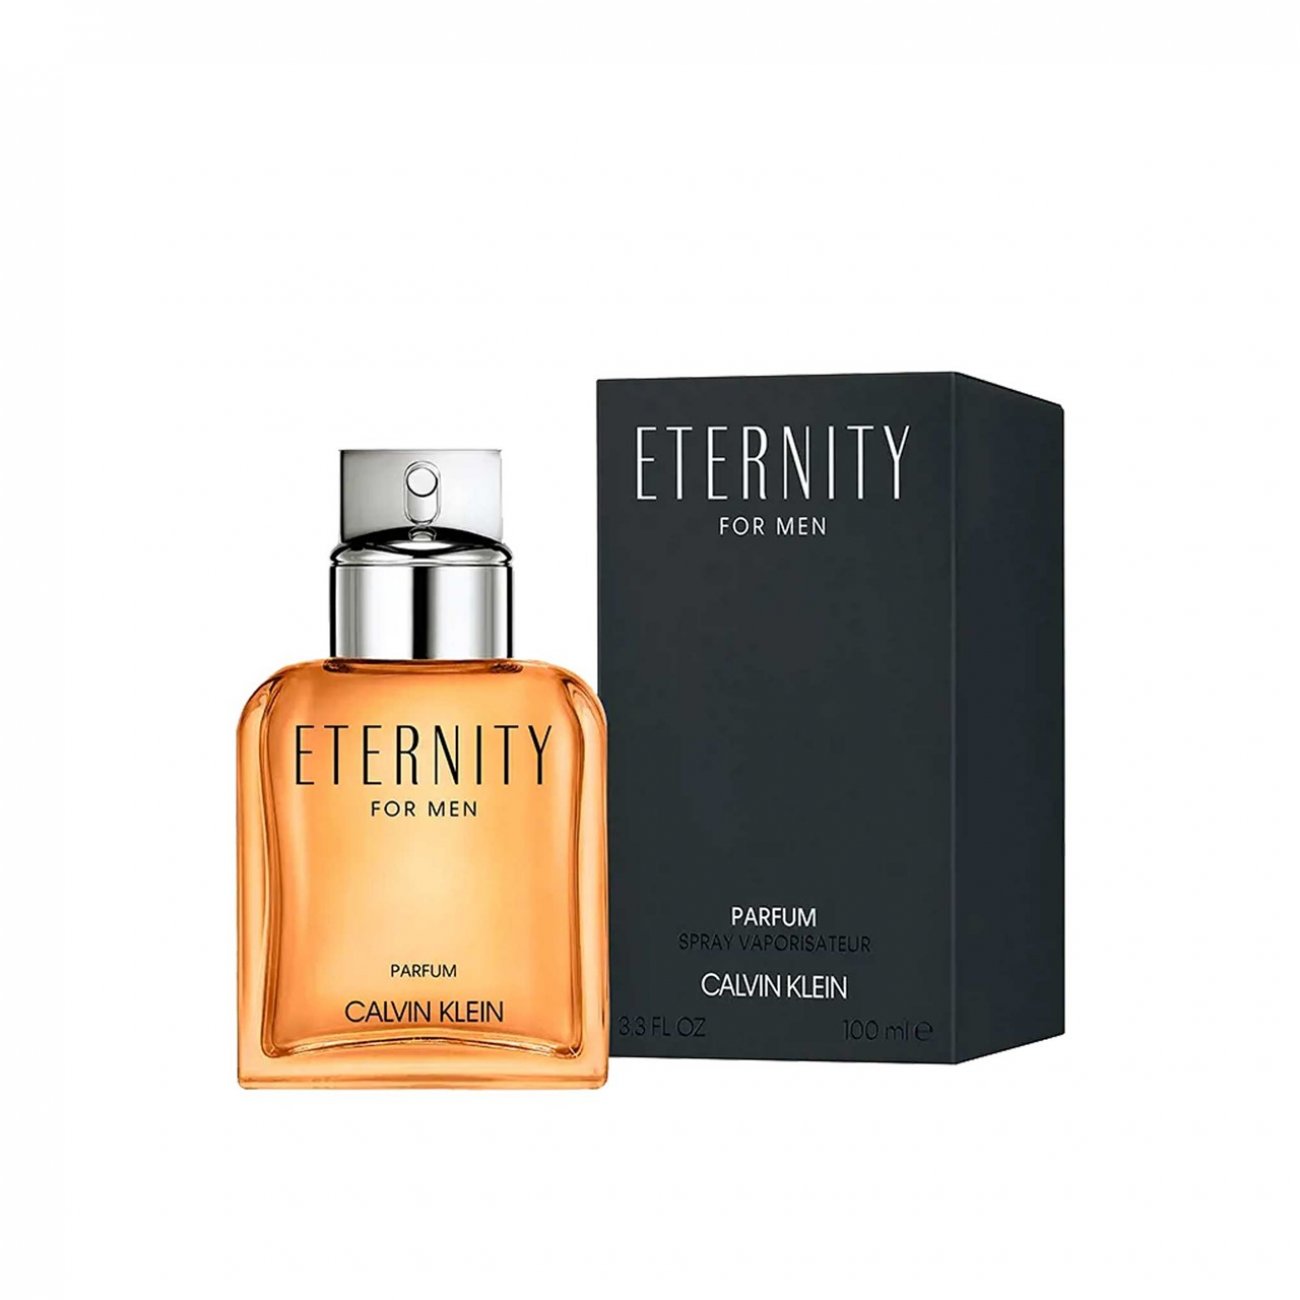 Verslaving Verraad winnen Buy Calvin Klein Eternity For Men Parfum 100ml (3.3 fl oz) · USA